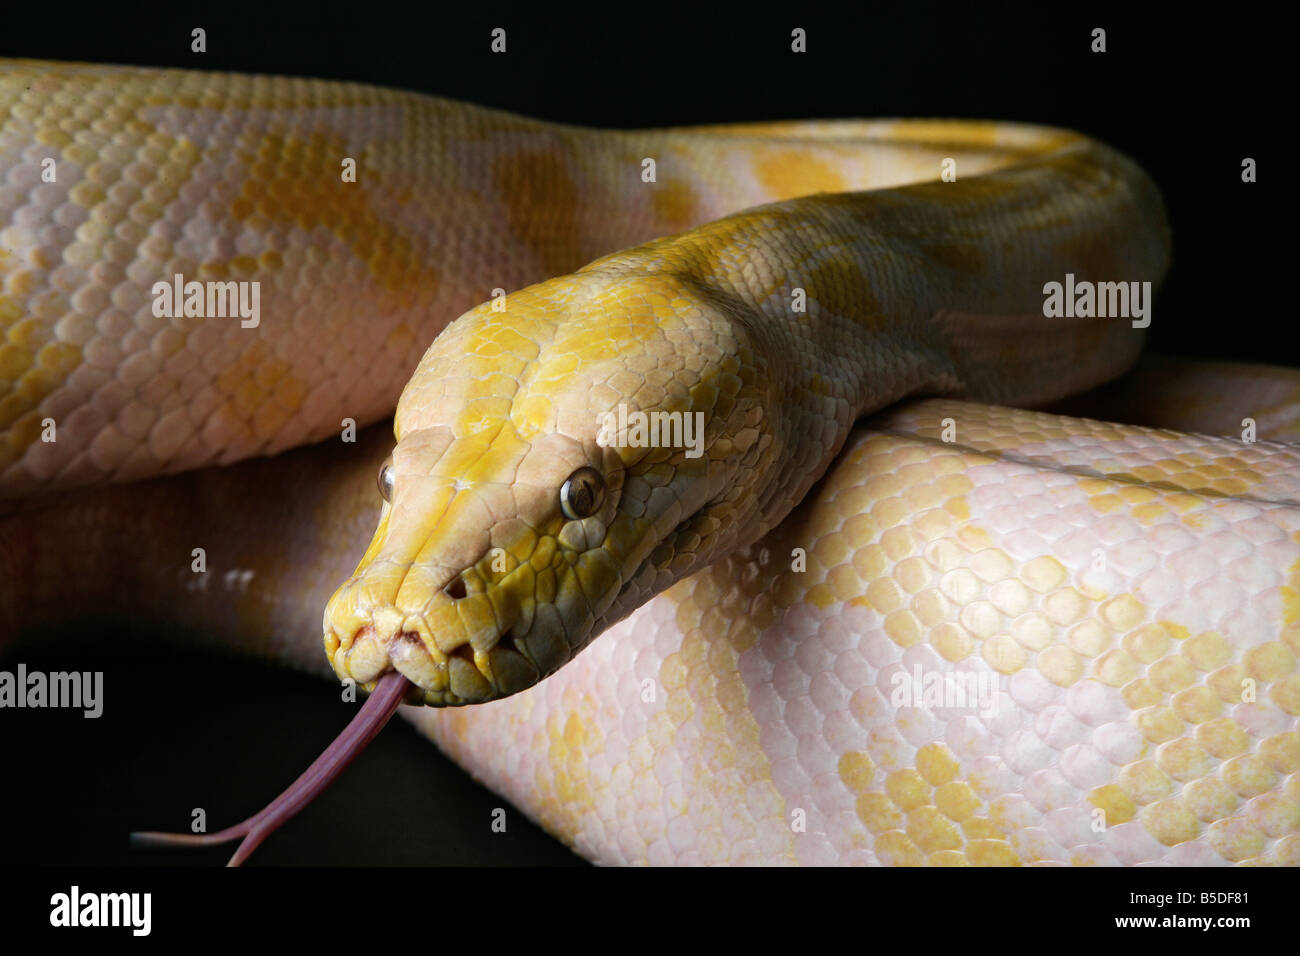 Male Albino Burmese Python snake on a black background Stock Photo